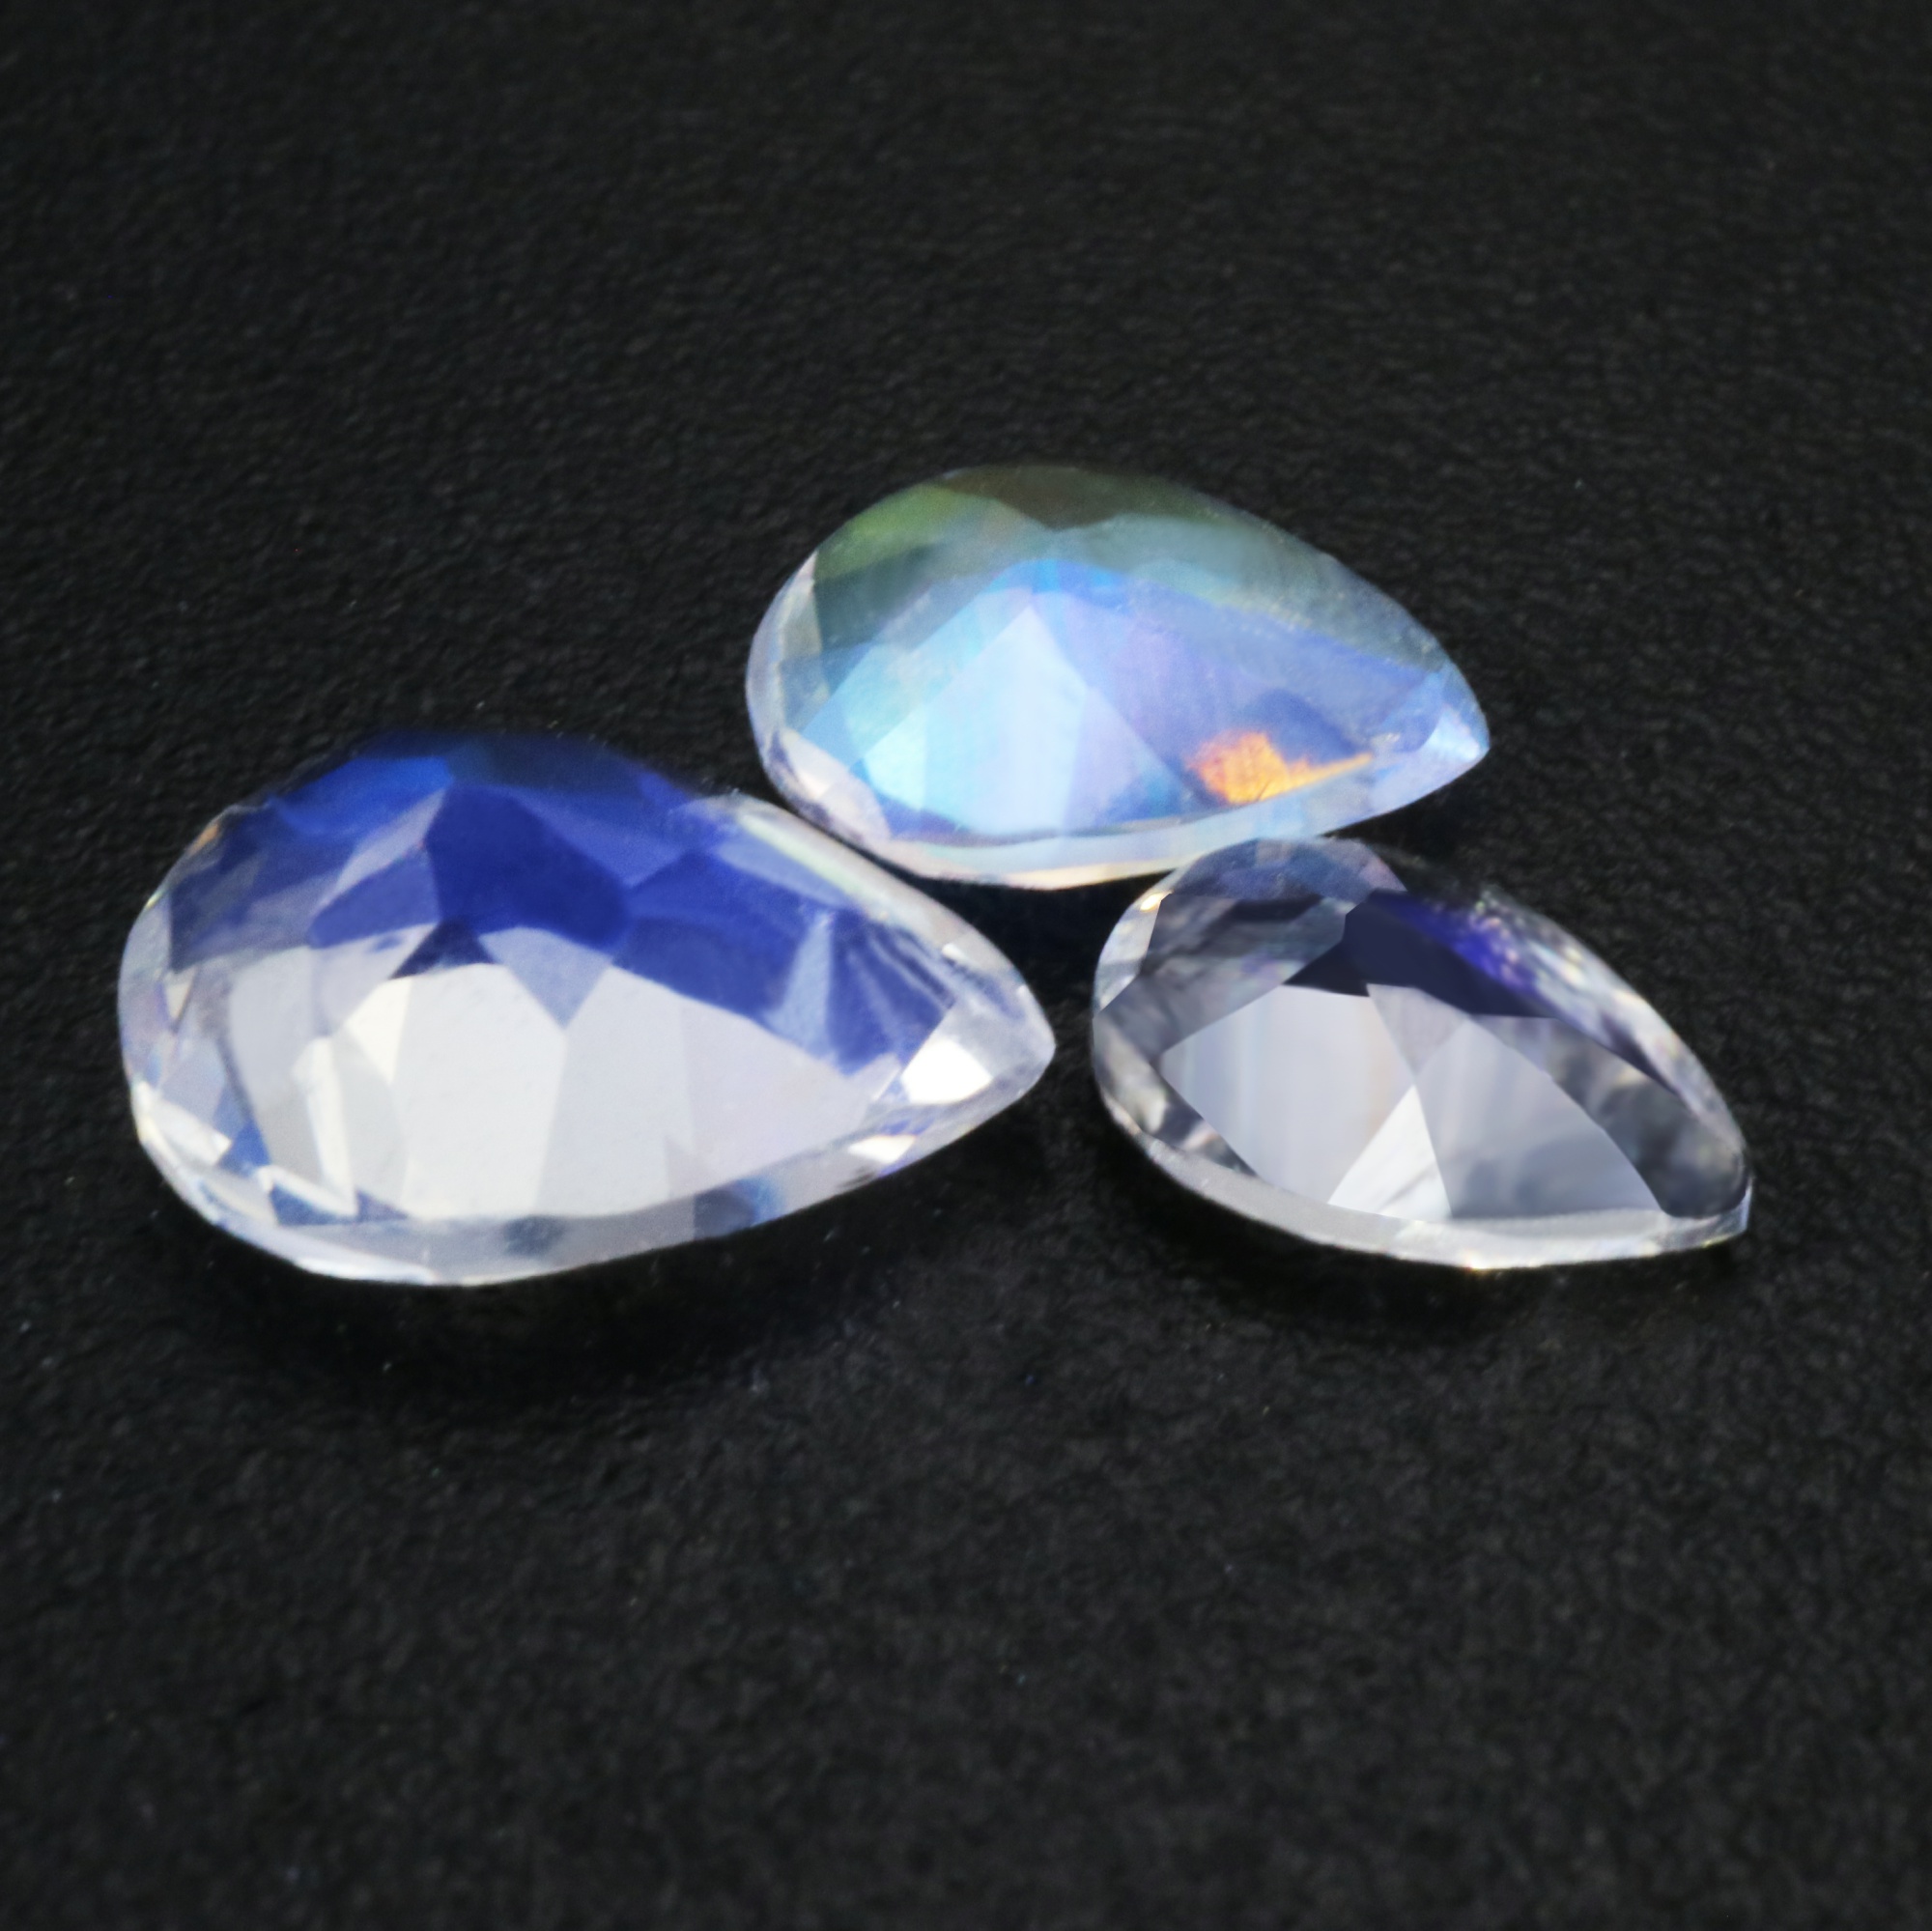 1Pcs Pear Drop Blue Moonstone June Birthstone Faceted Cut AAA Grade Loose Gemstone Natural Semi Precious Stone DIY Jewelry Supplies 4150017 - Click Image to Close